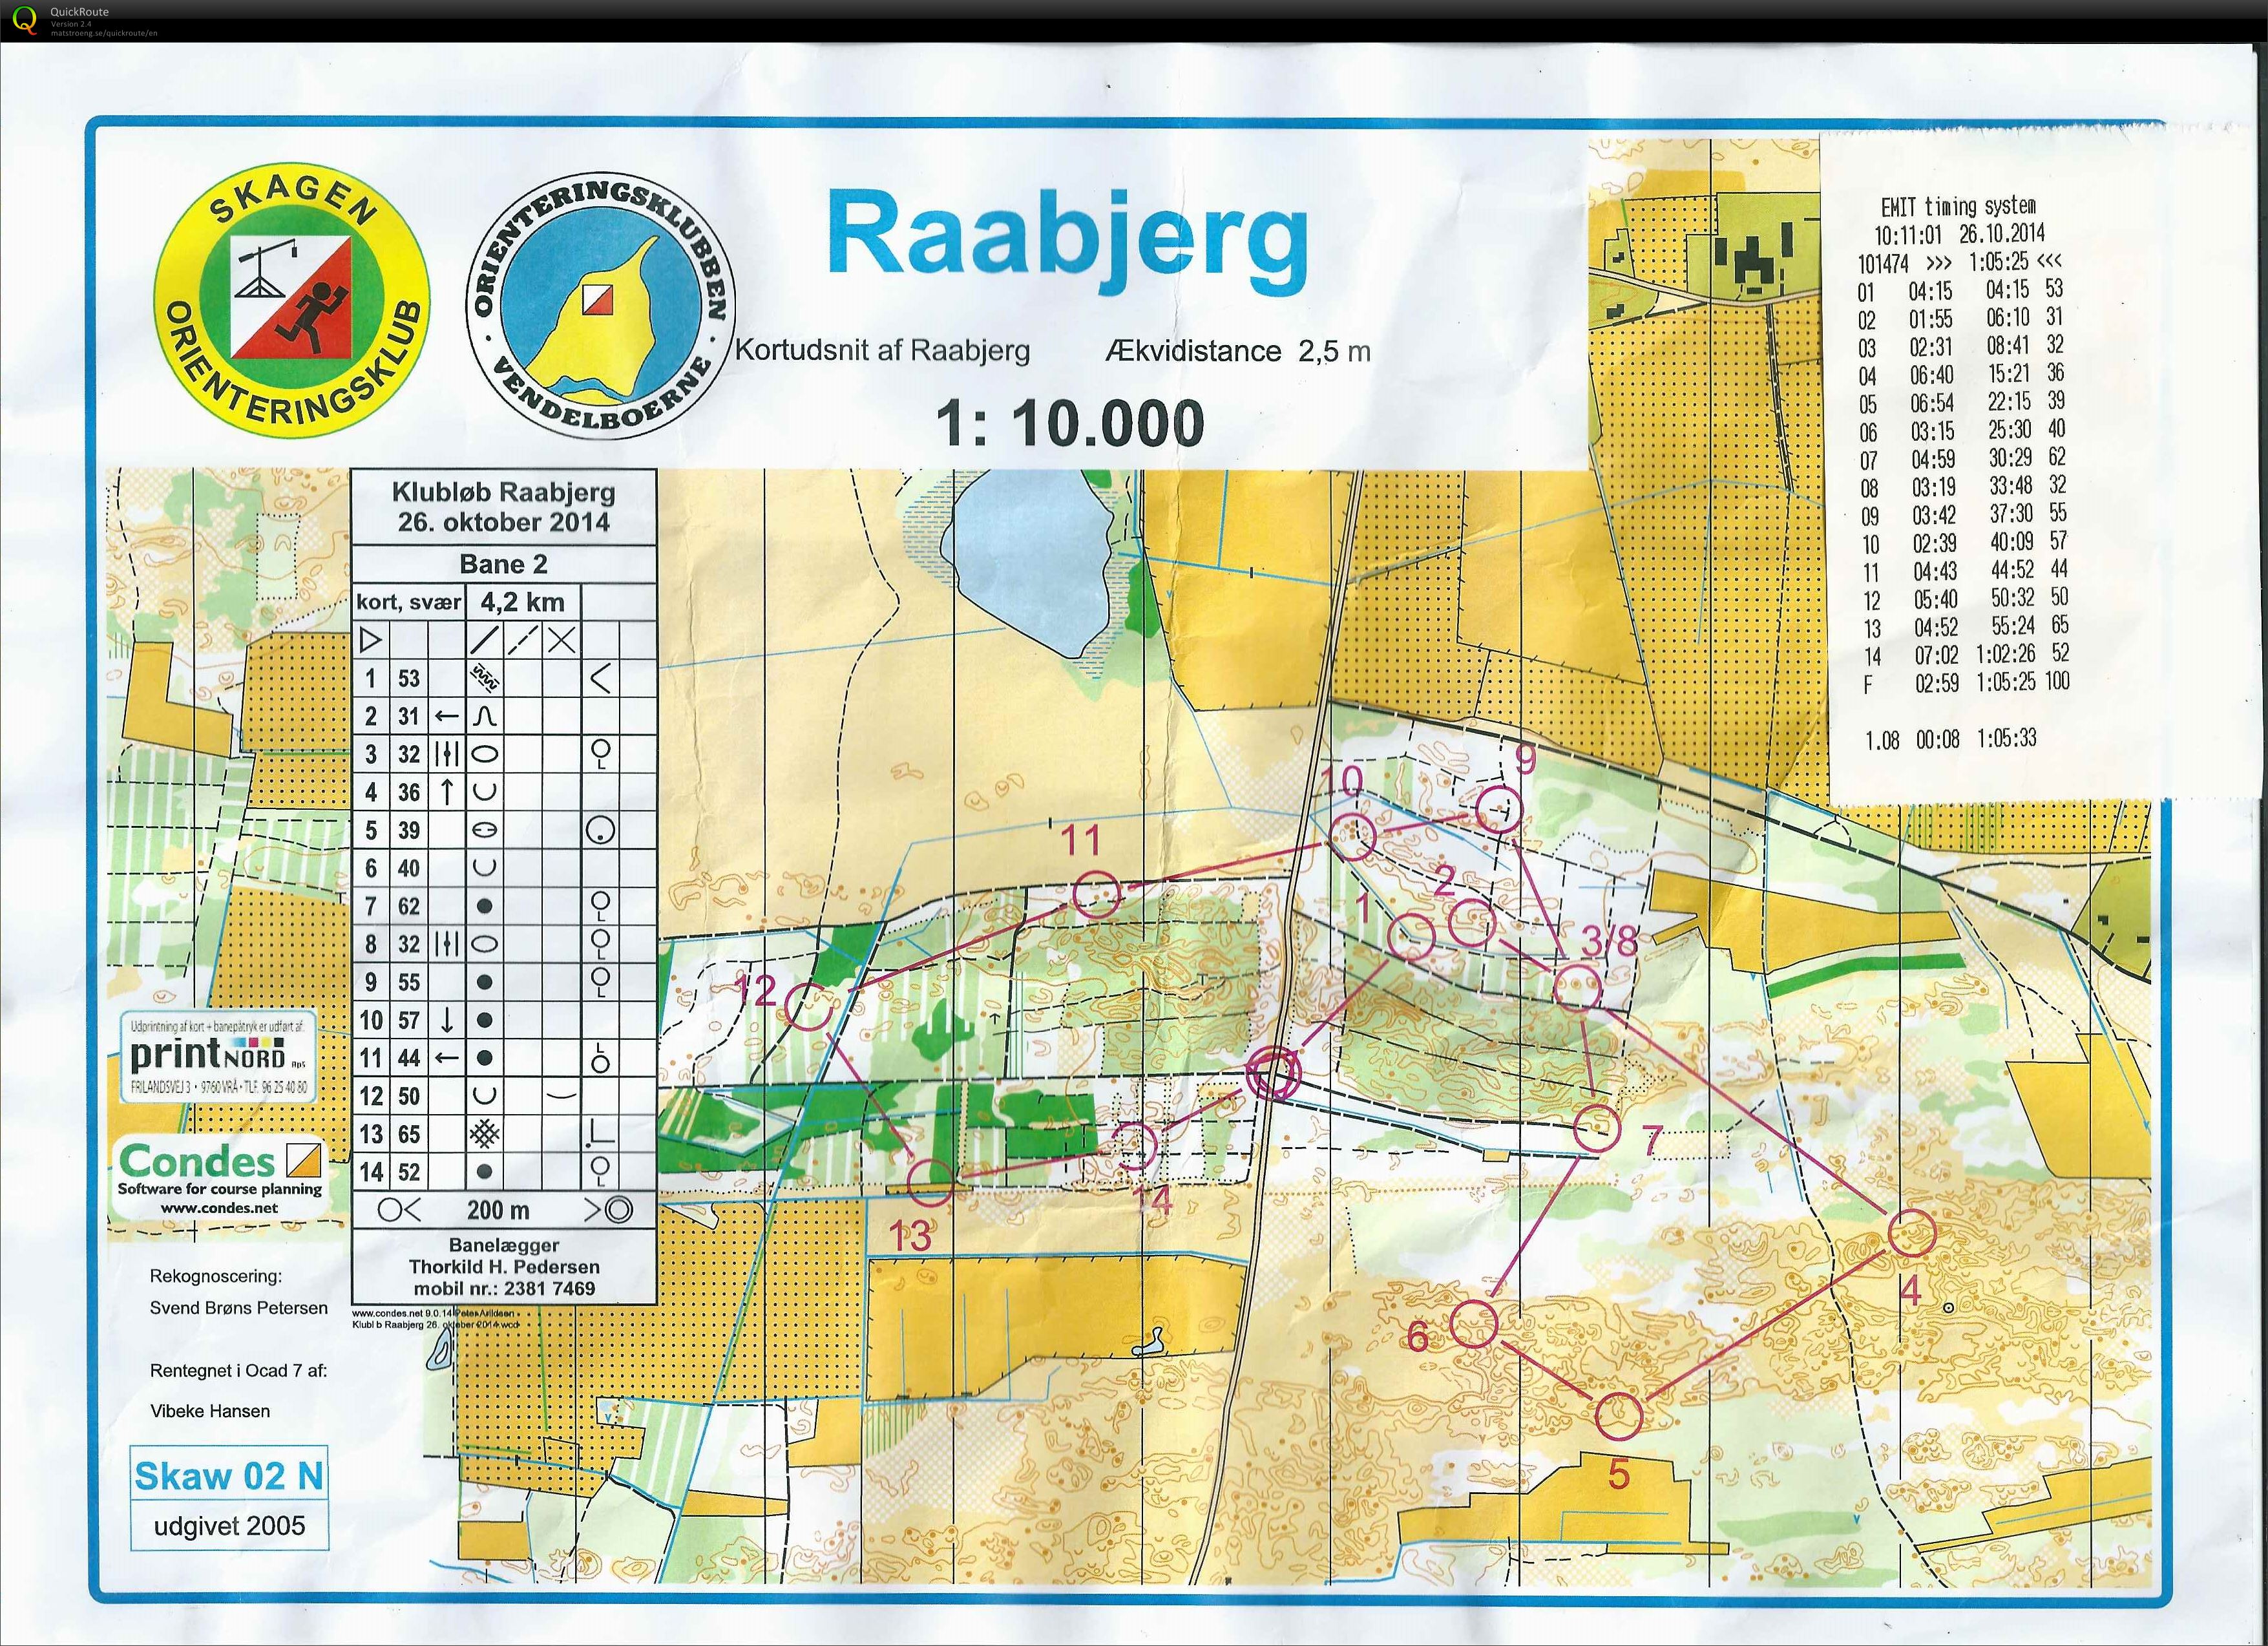 Råbjerg (26.10.2014)